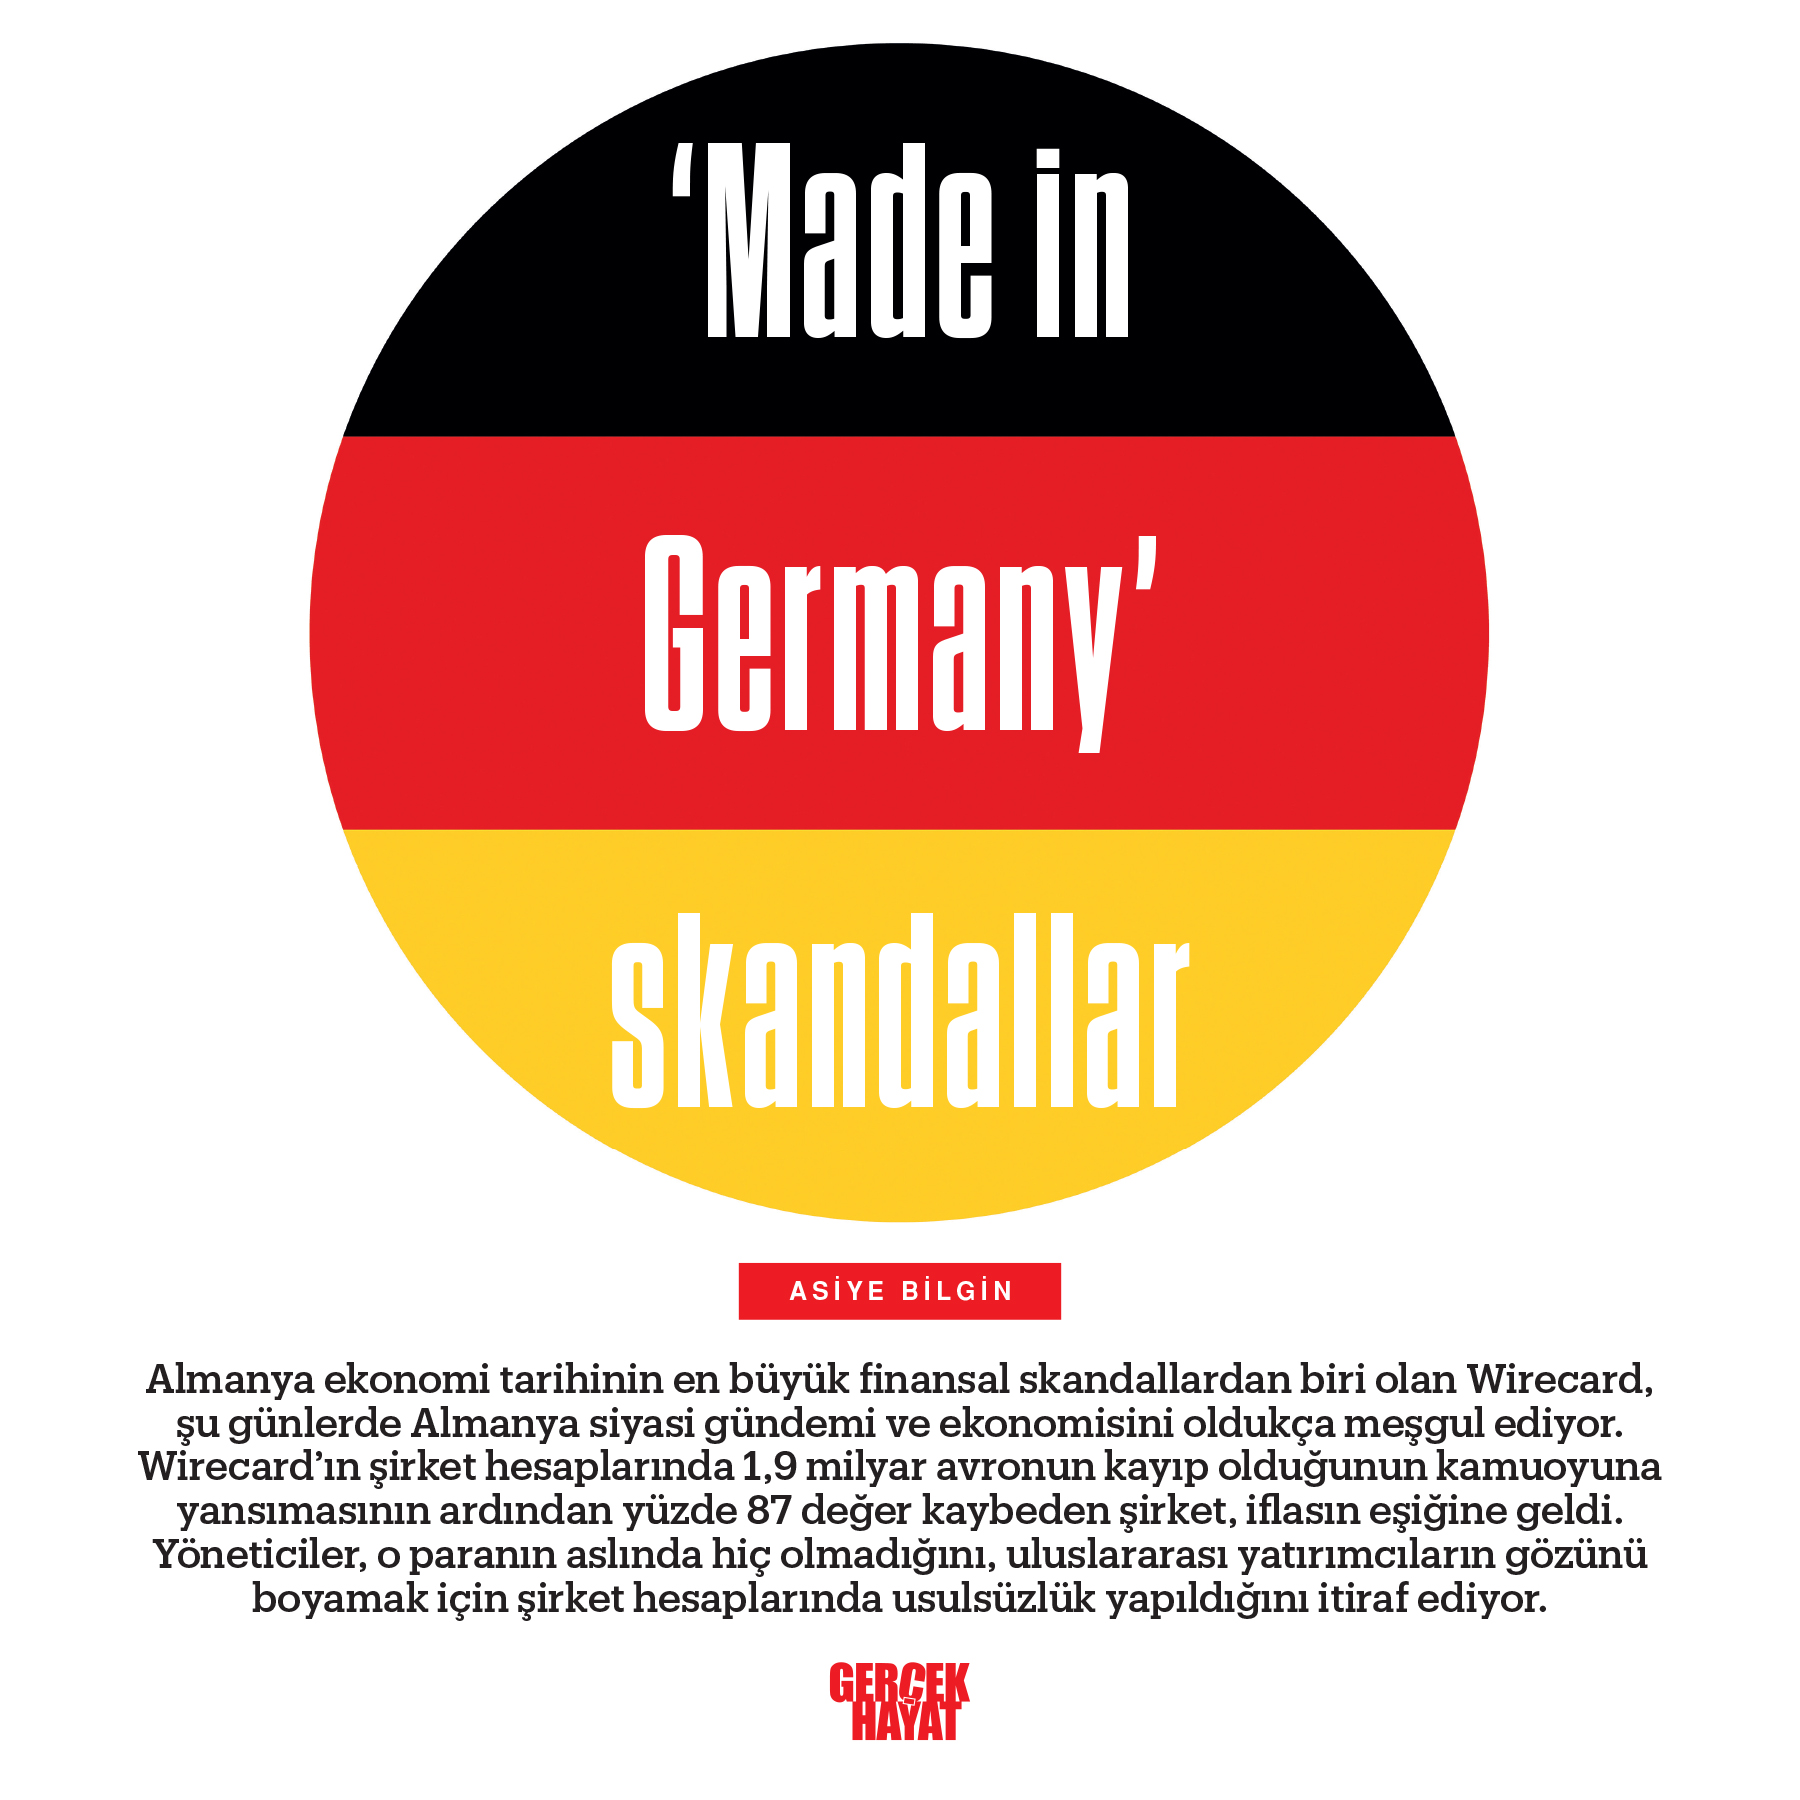 ‚Made in Germany‘ skandallar